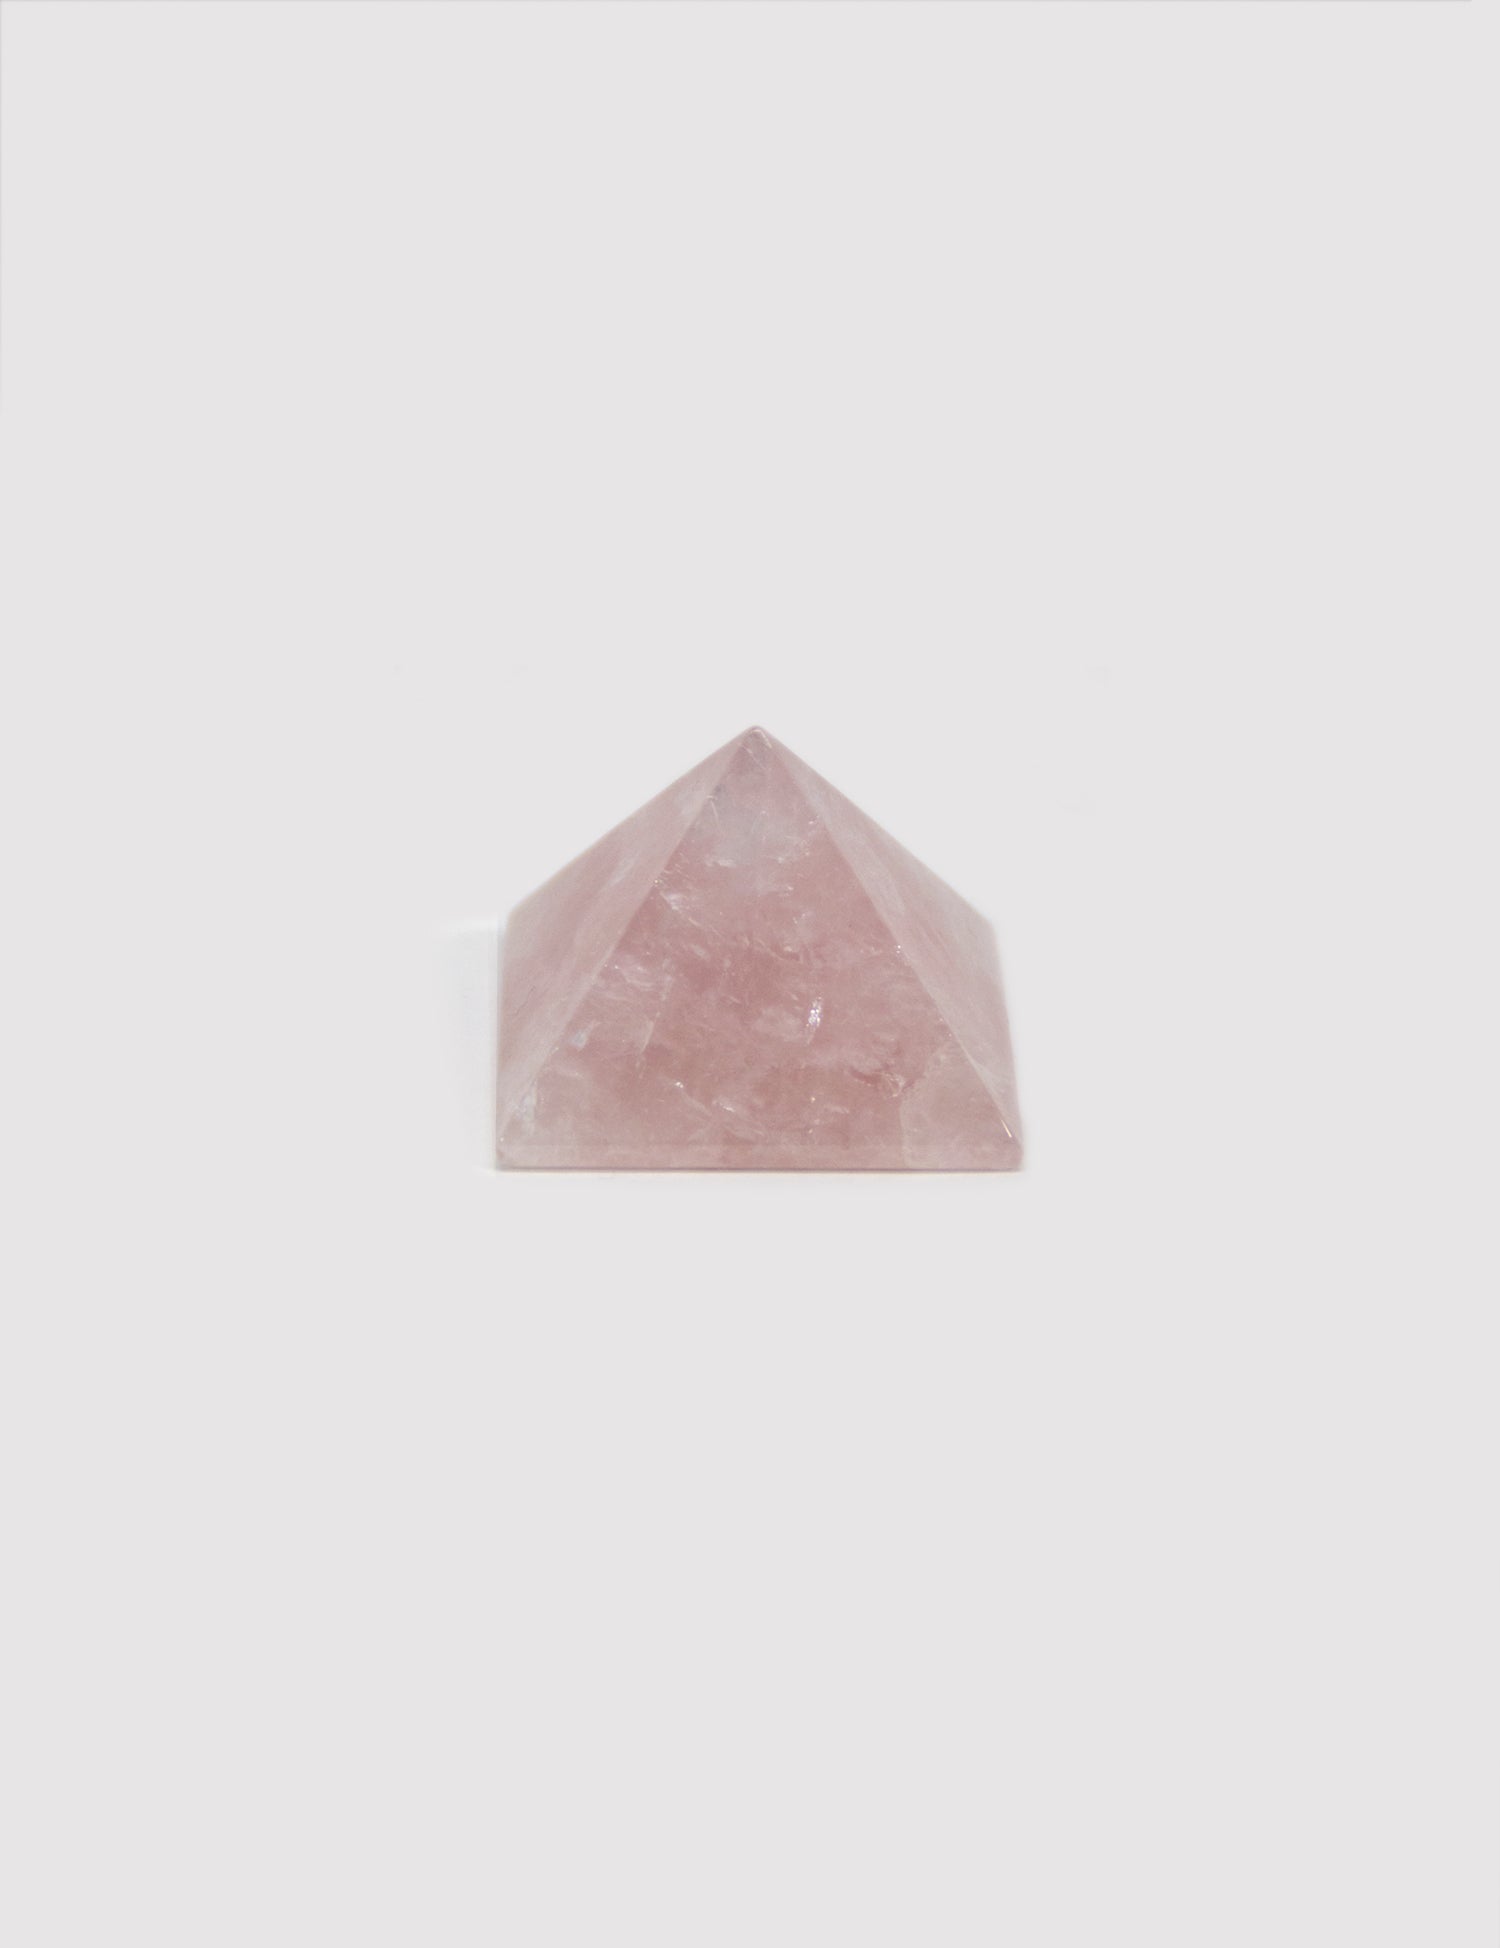 llayers pyramide pierre quartz rose lithothérapie meditation pink quartz stone pyramid